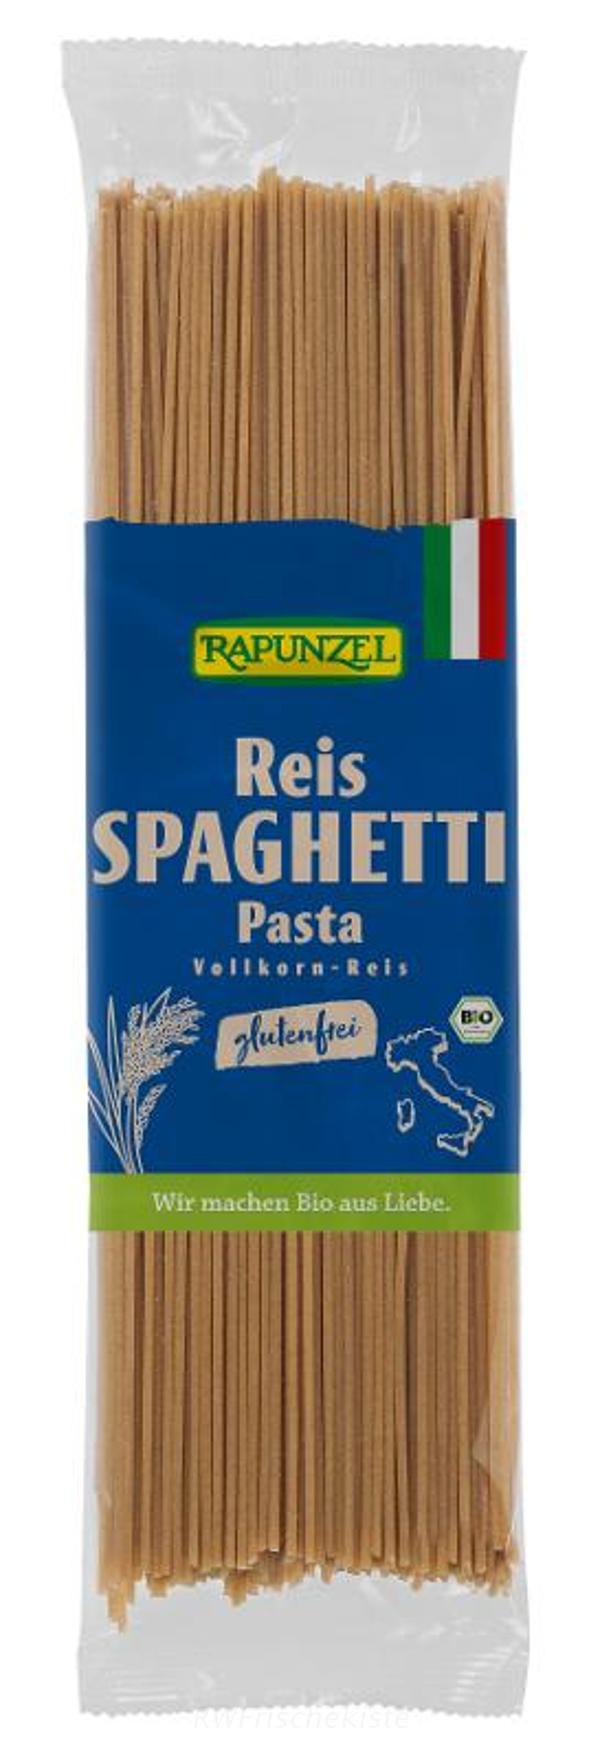 Produktfoto zu Reis-Spaghetti